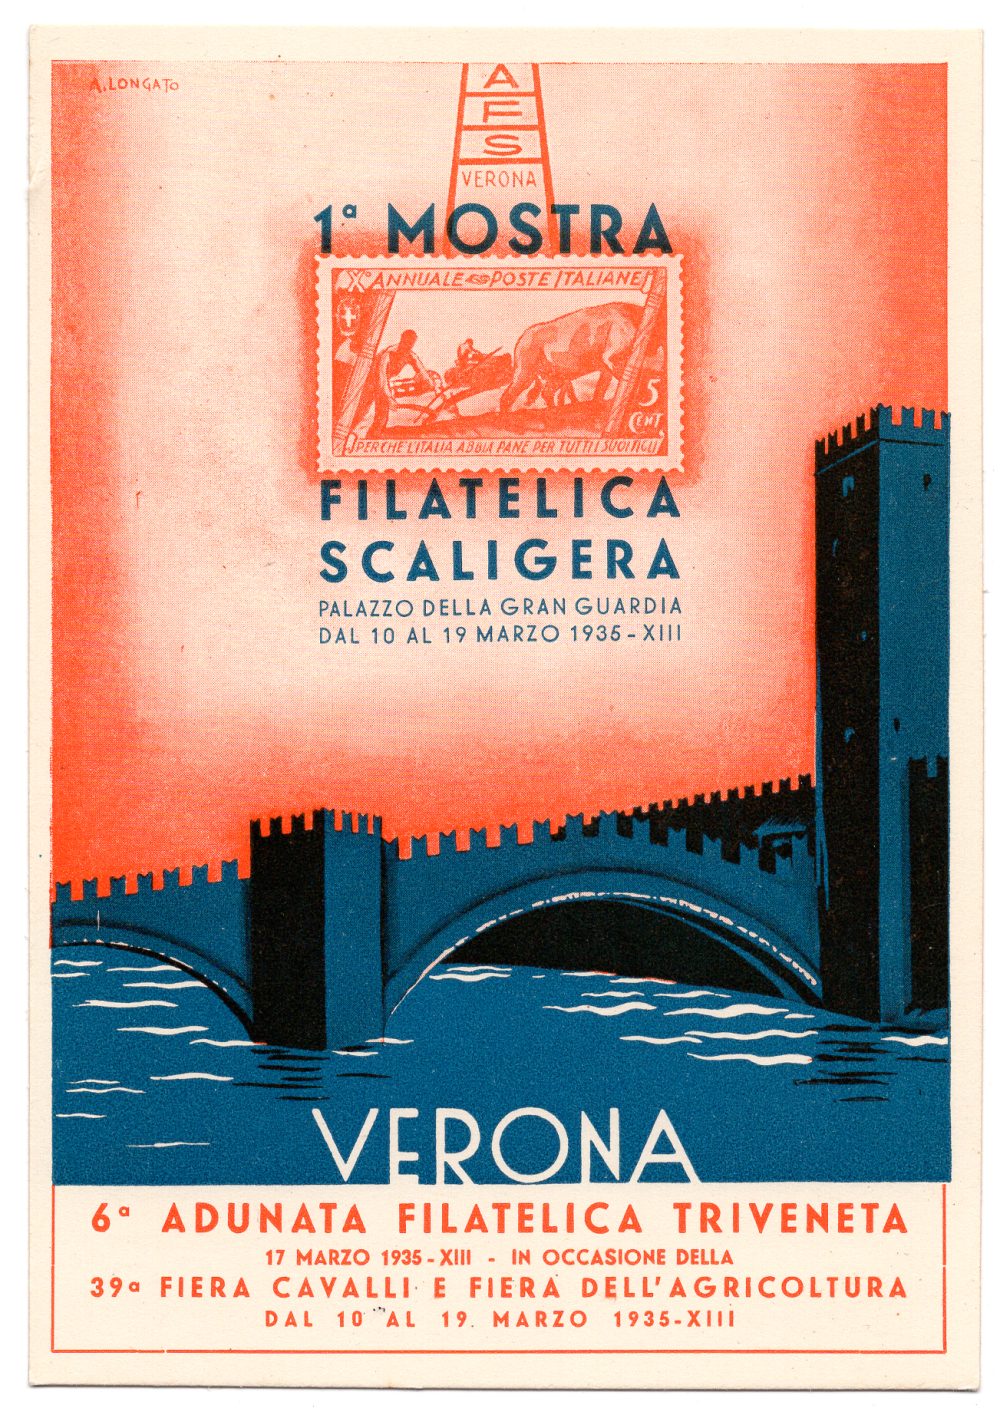 Prima mostra filatelica scaligera - Verona 1935